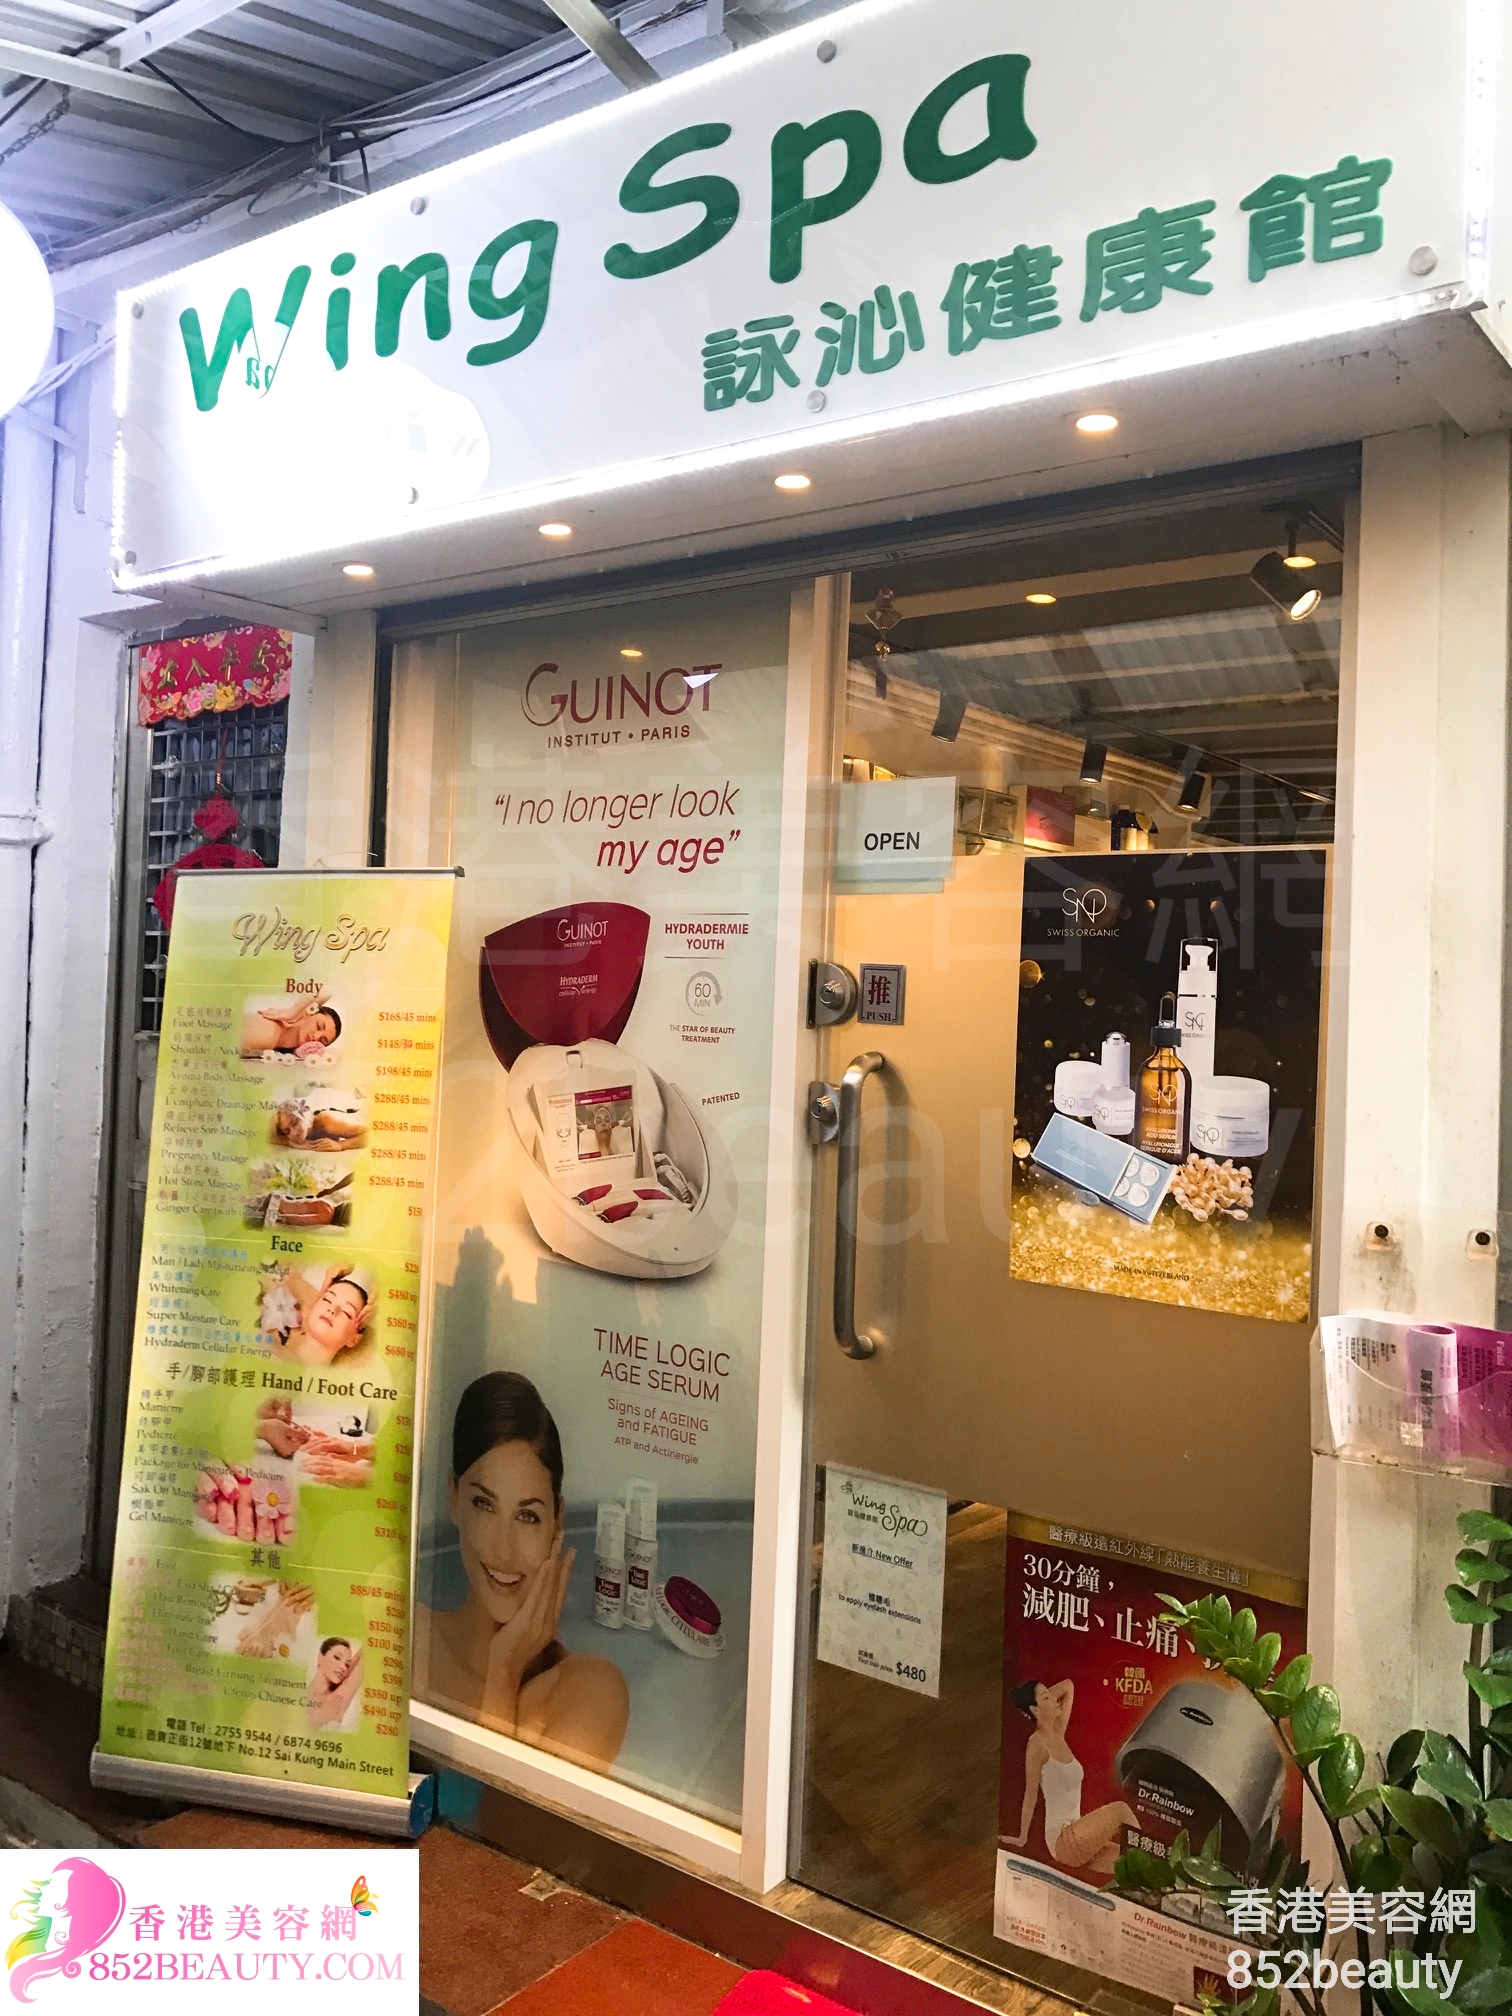 Facial Care: Wing Spa 詠沁健康館